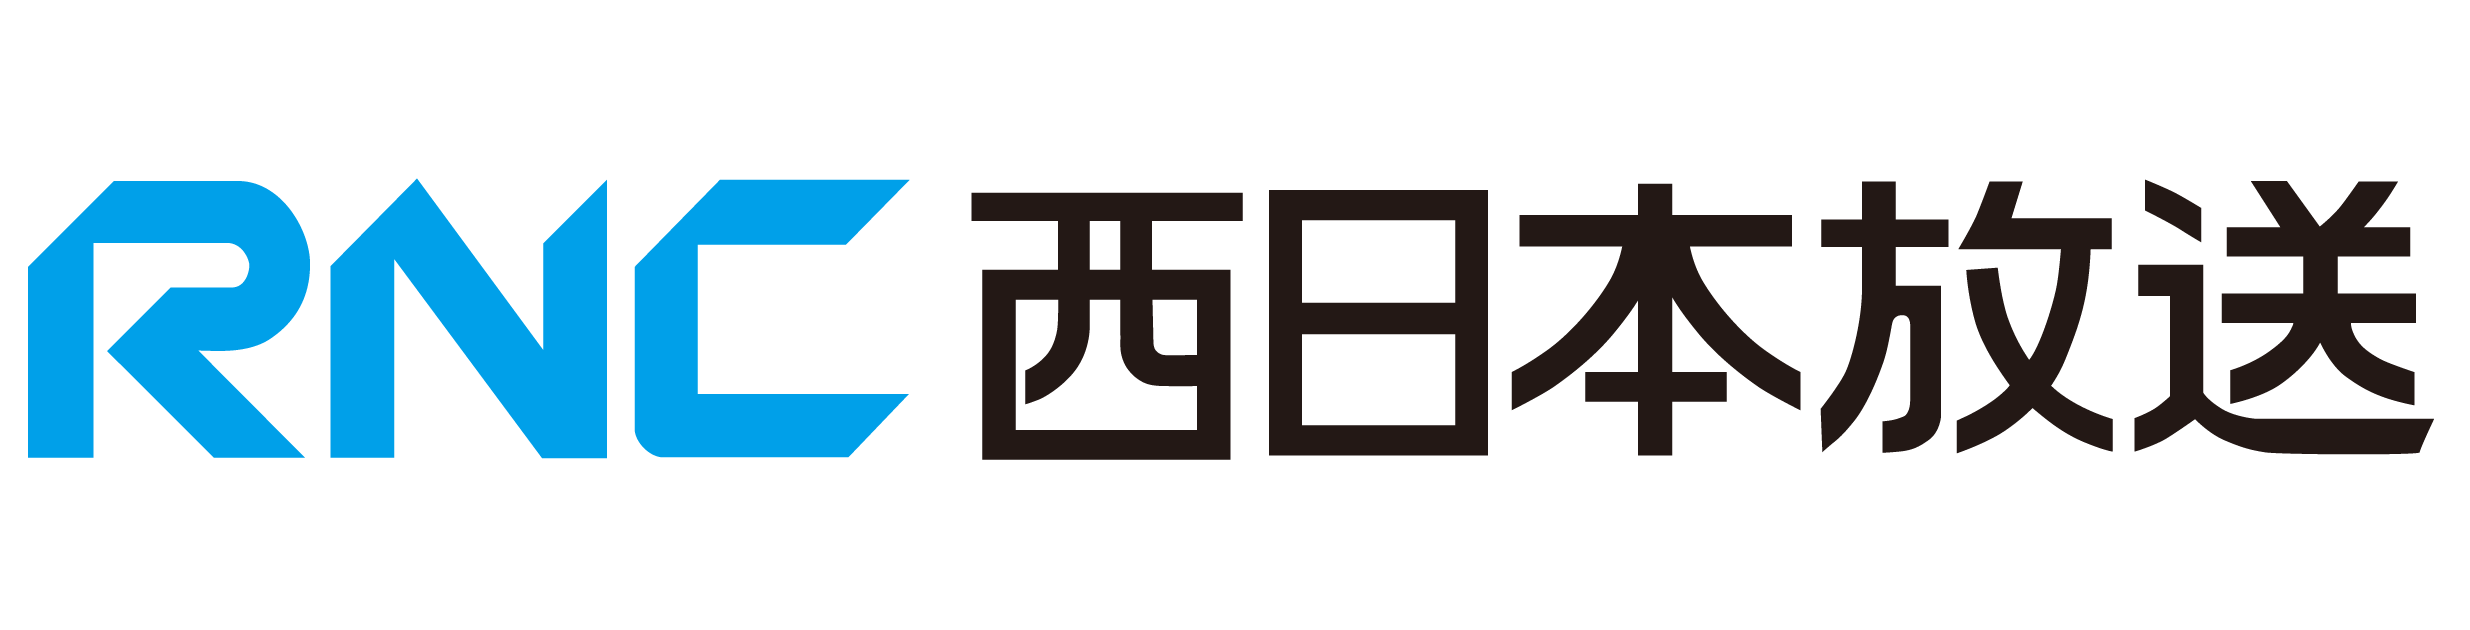 nishinihon-logo